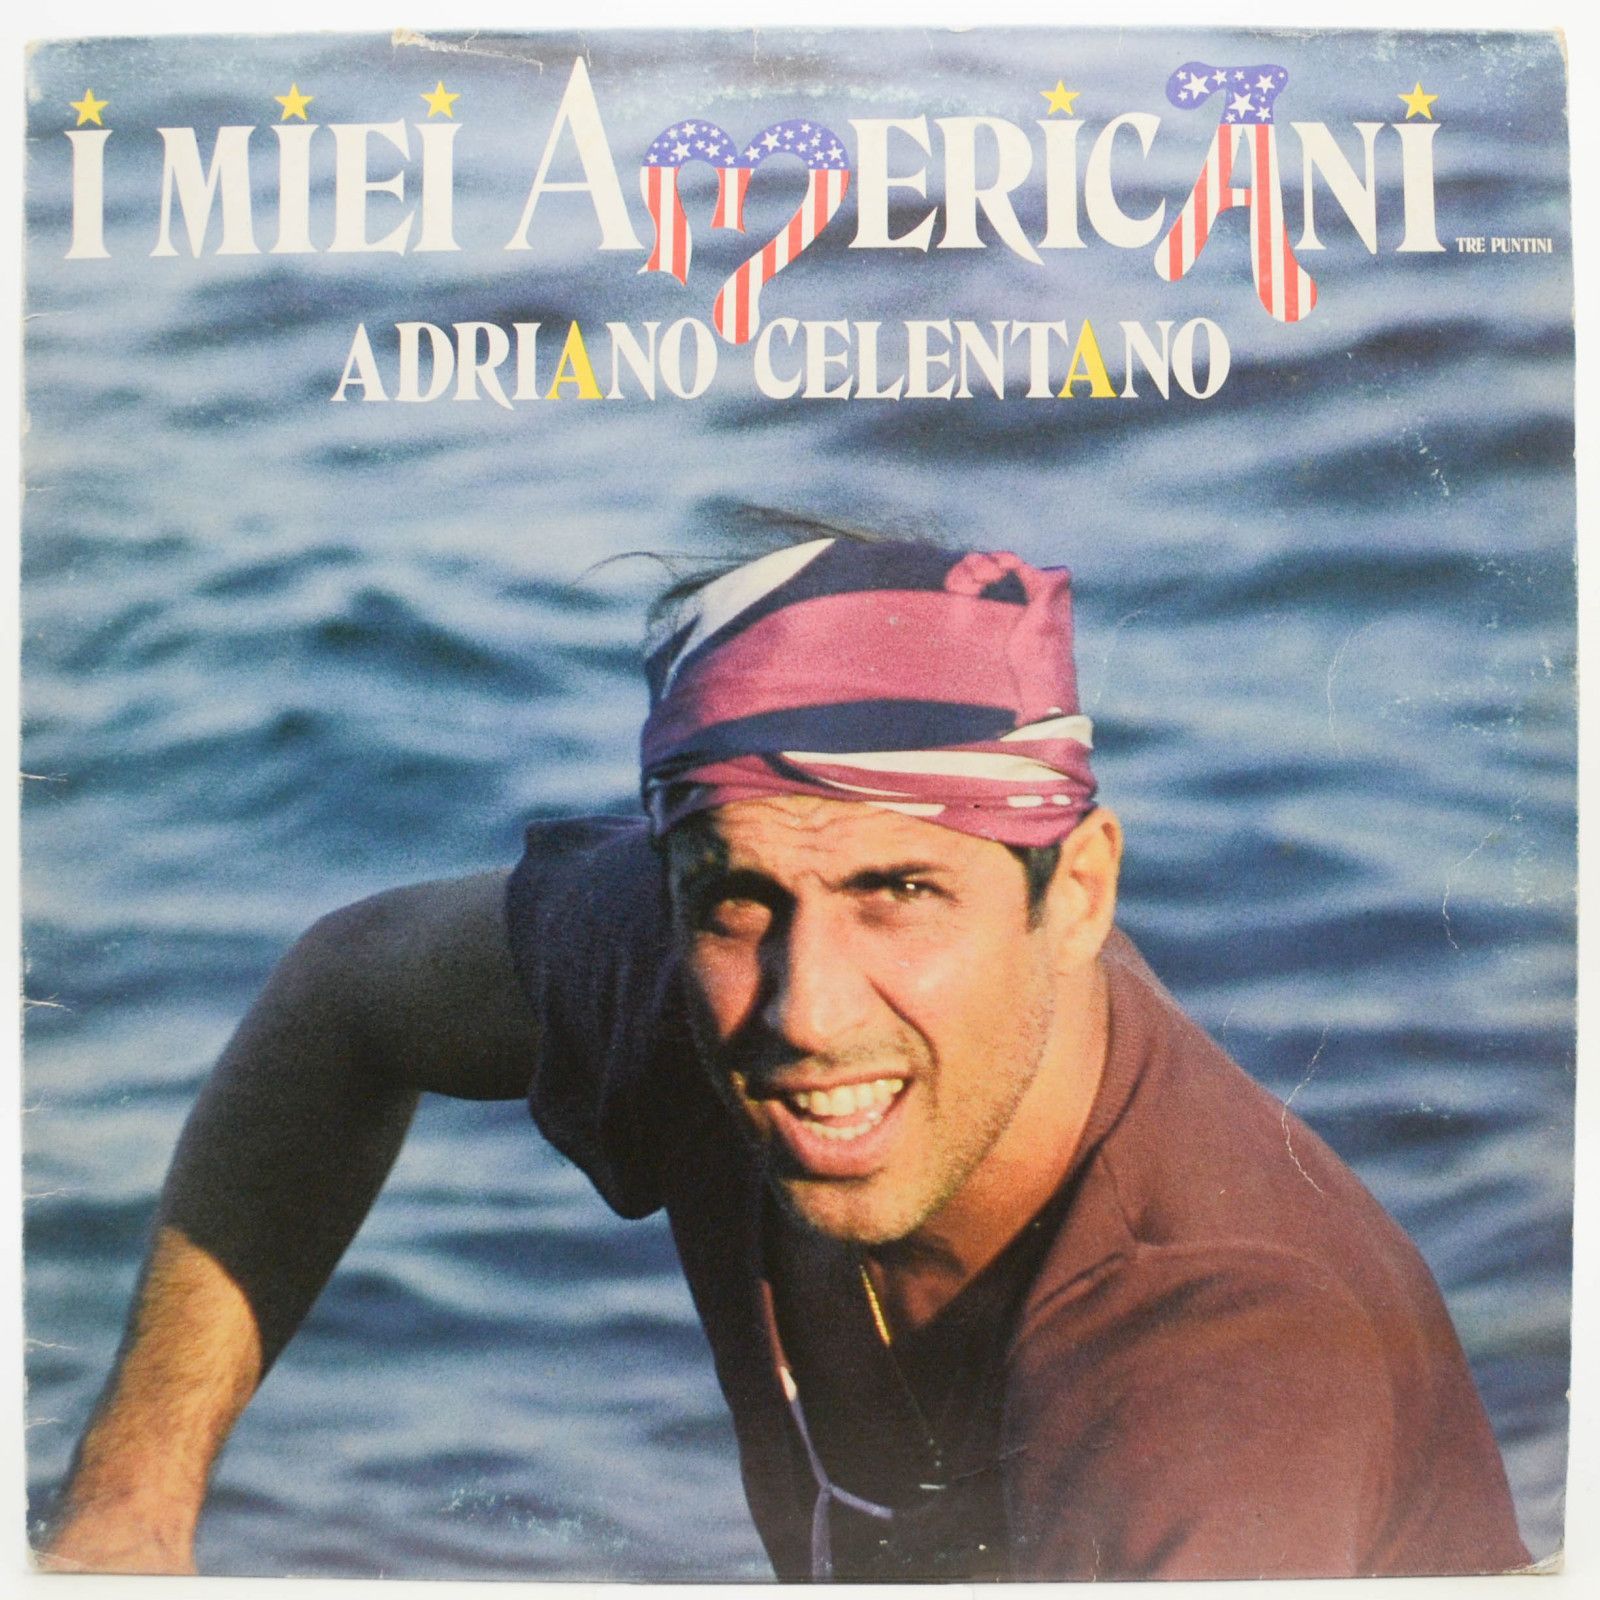 Adriano Celentano — I Miei Americani (Tre Puntini) (1-st, Italy, Clan), 1984